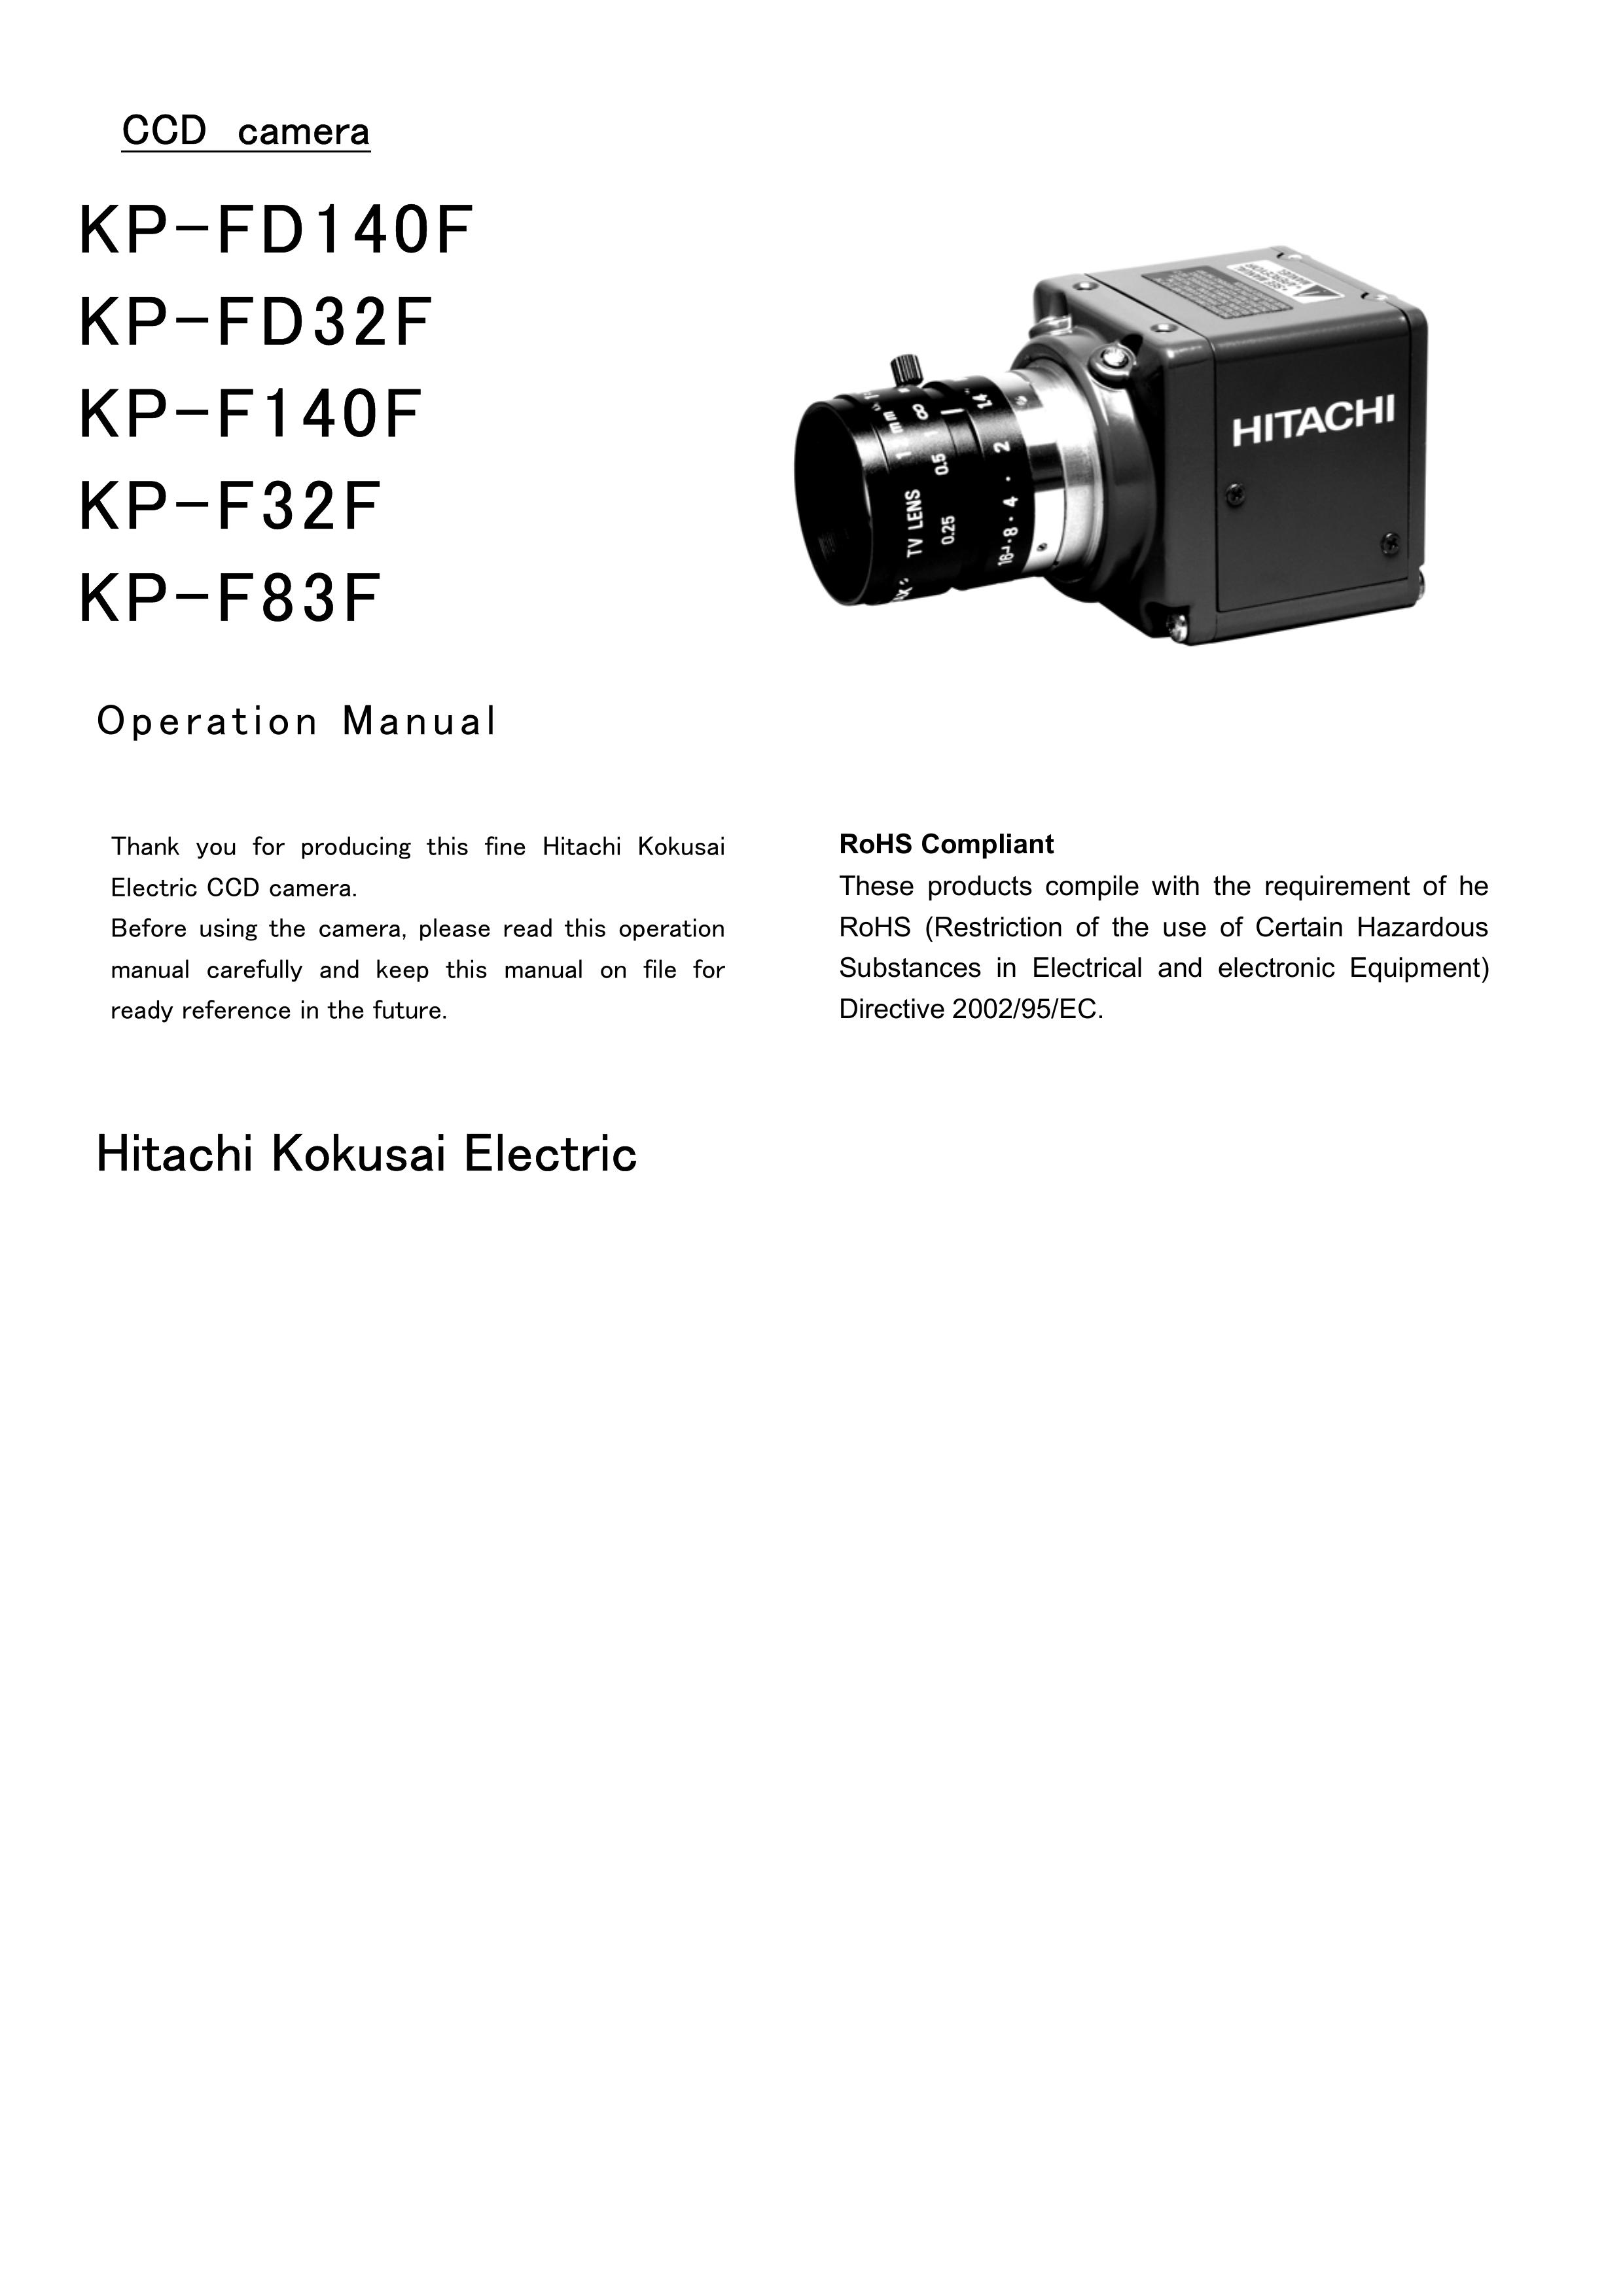 Hitachi KP-F140F Digital Camera User Manual